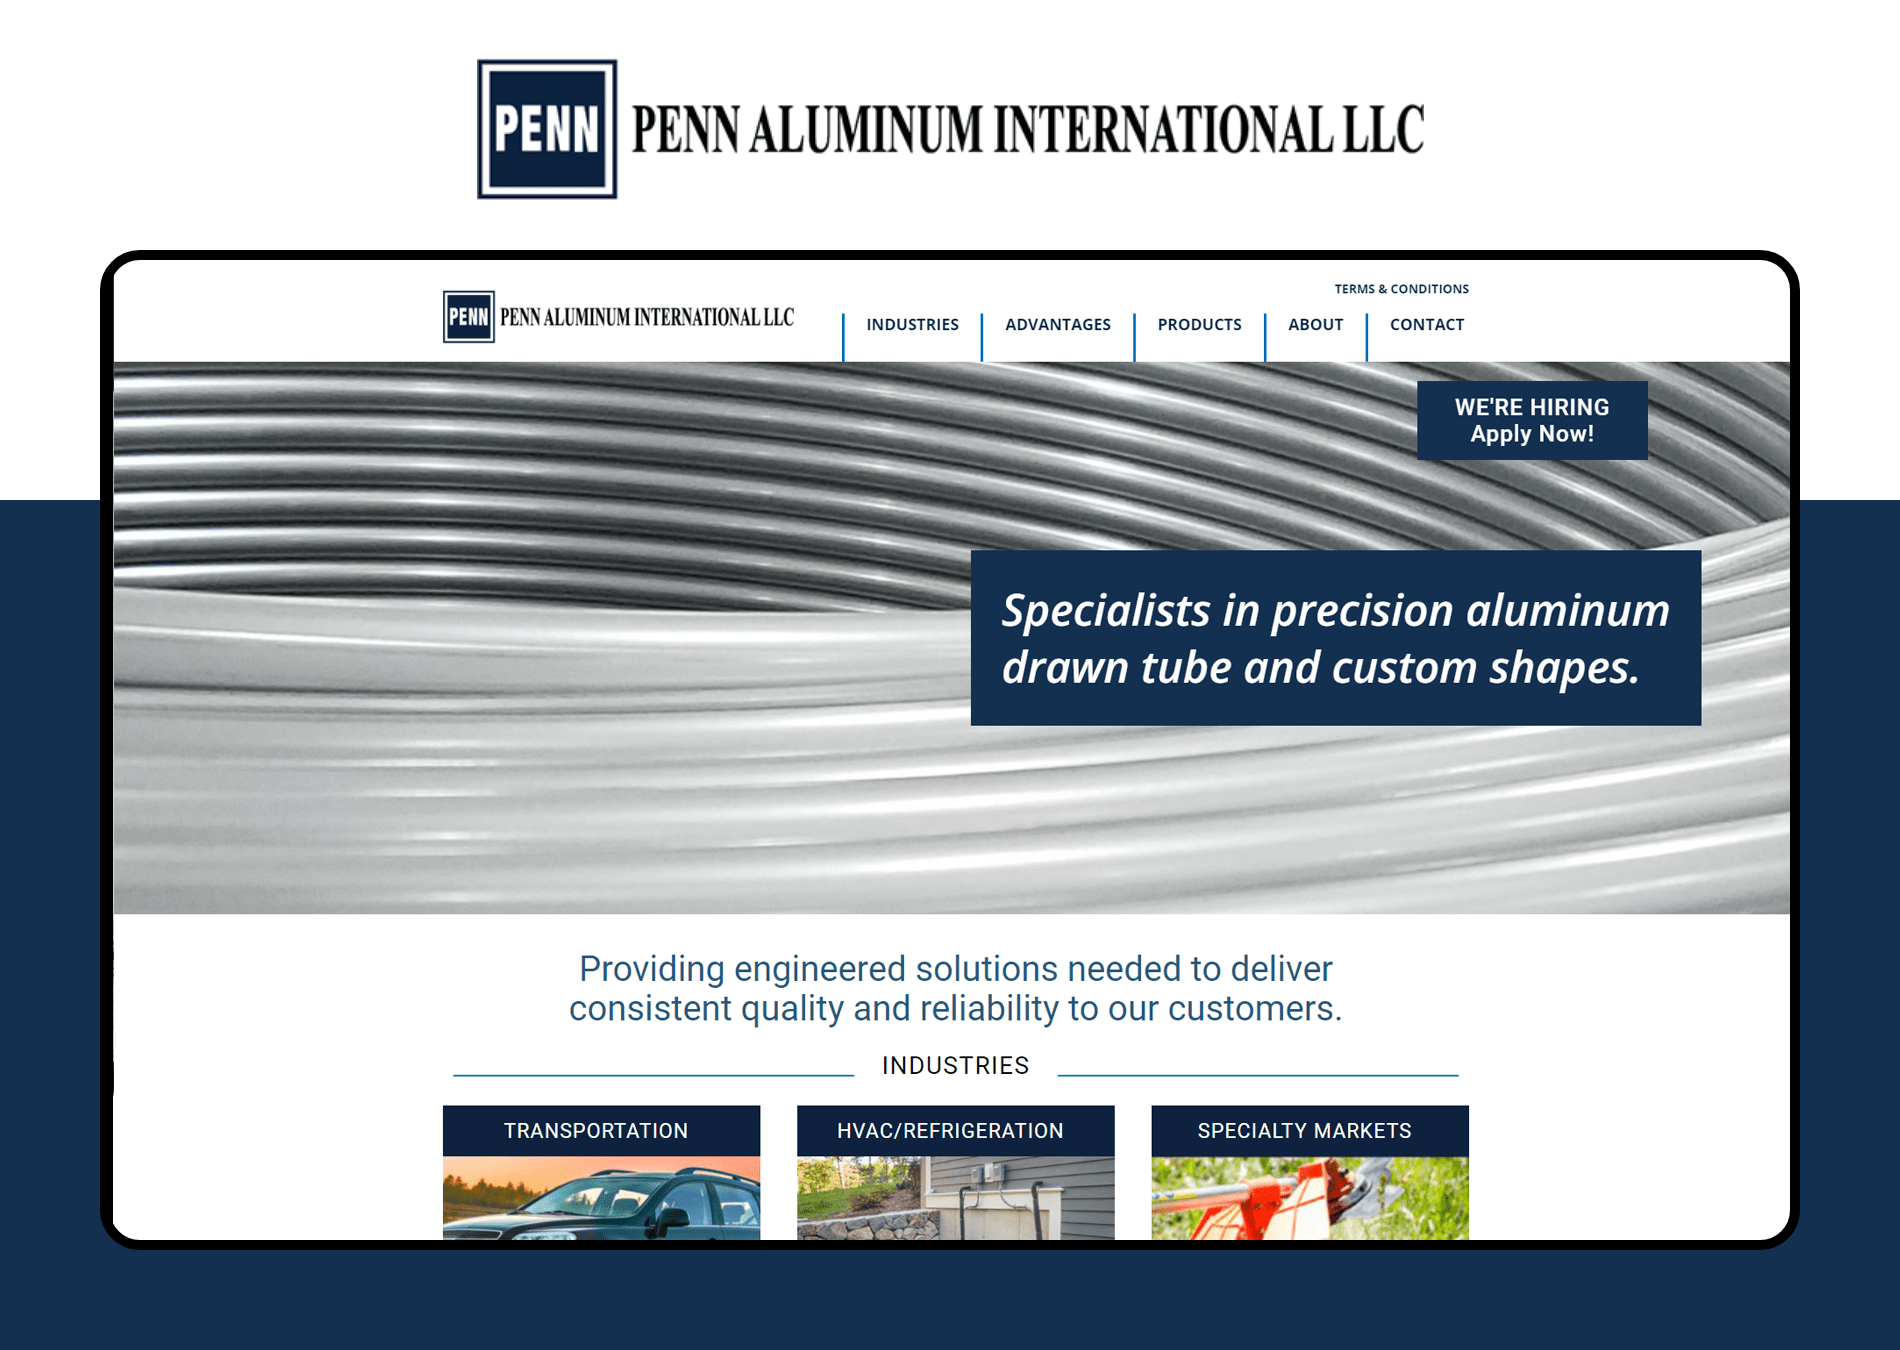 Penn Aluminum Internantional